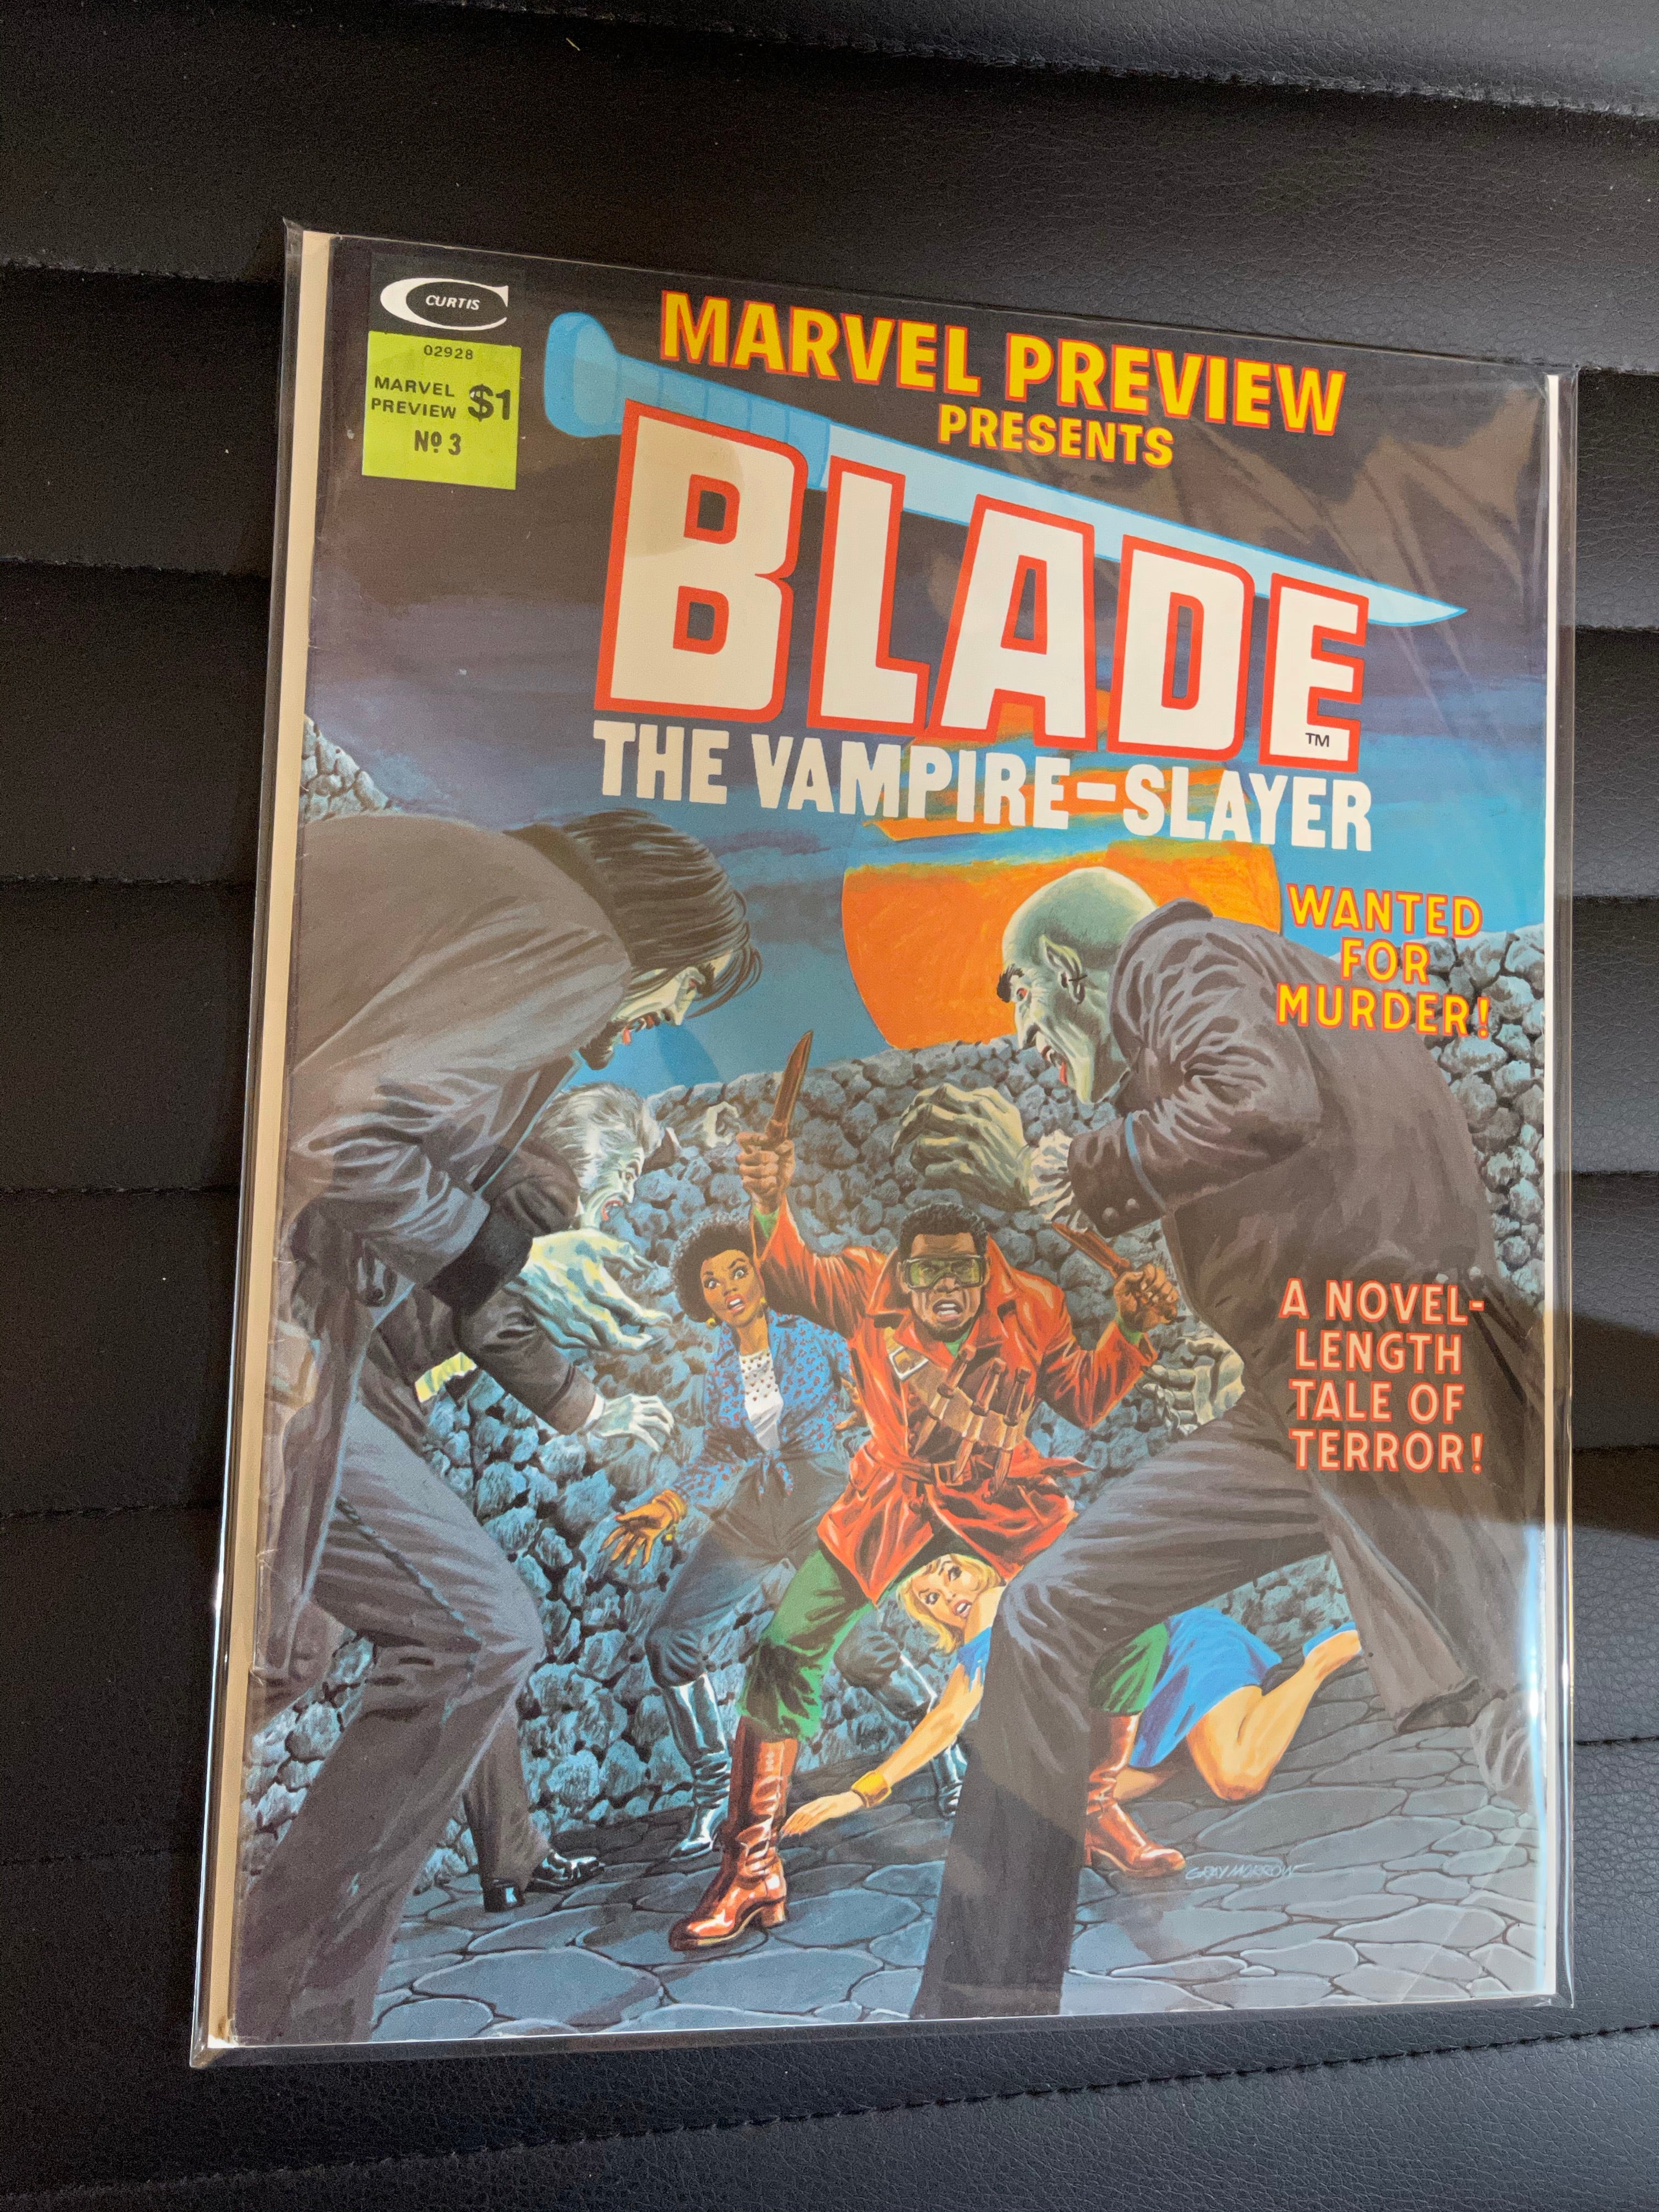 Marvel Preview #3 Blade the Vampire Slayer comic magazine